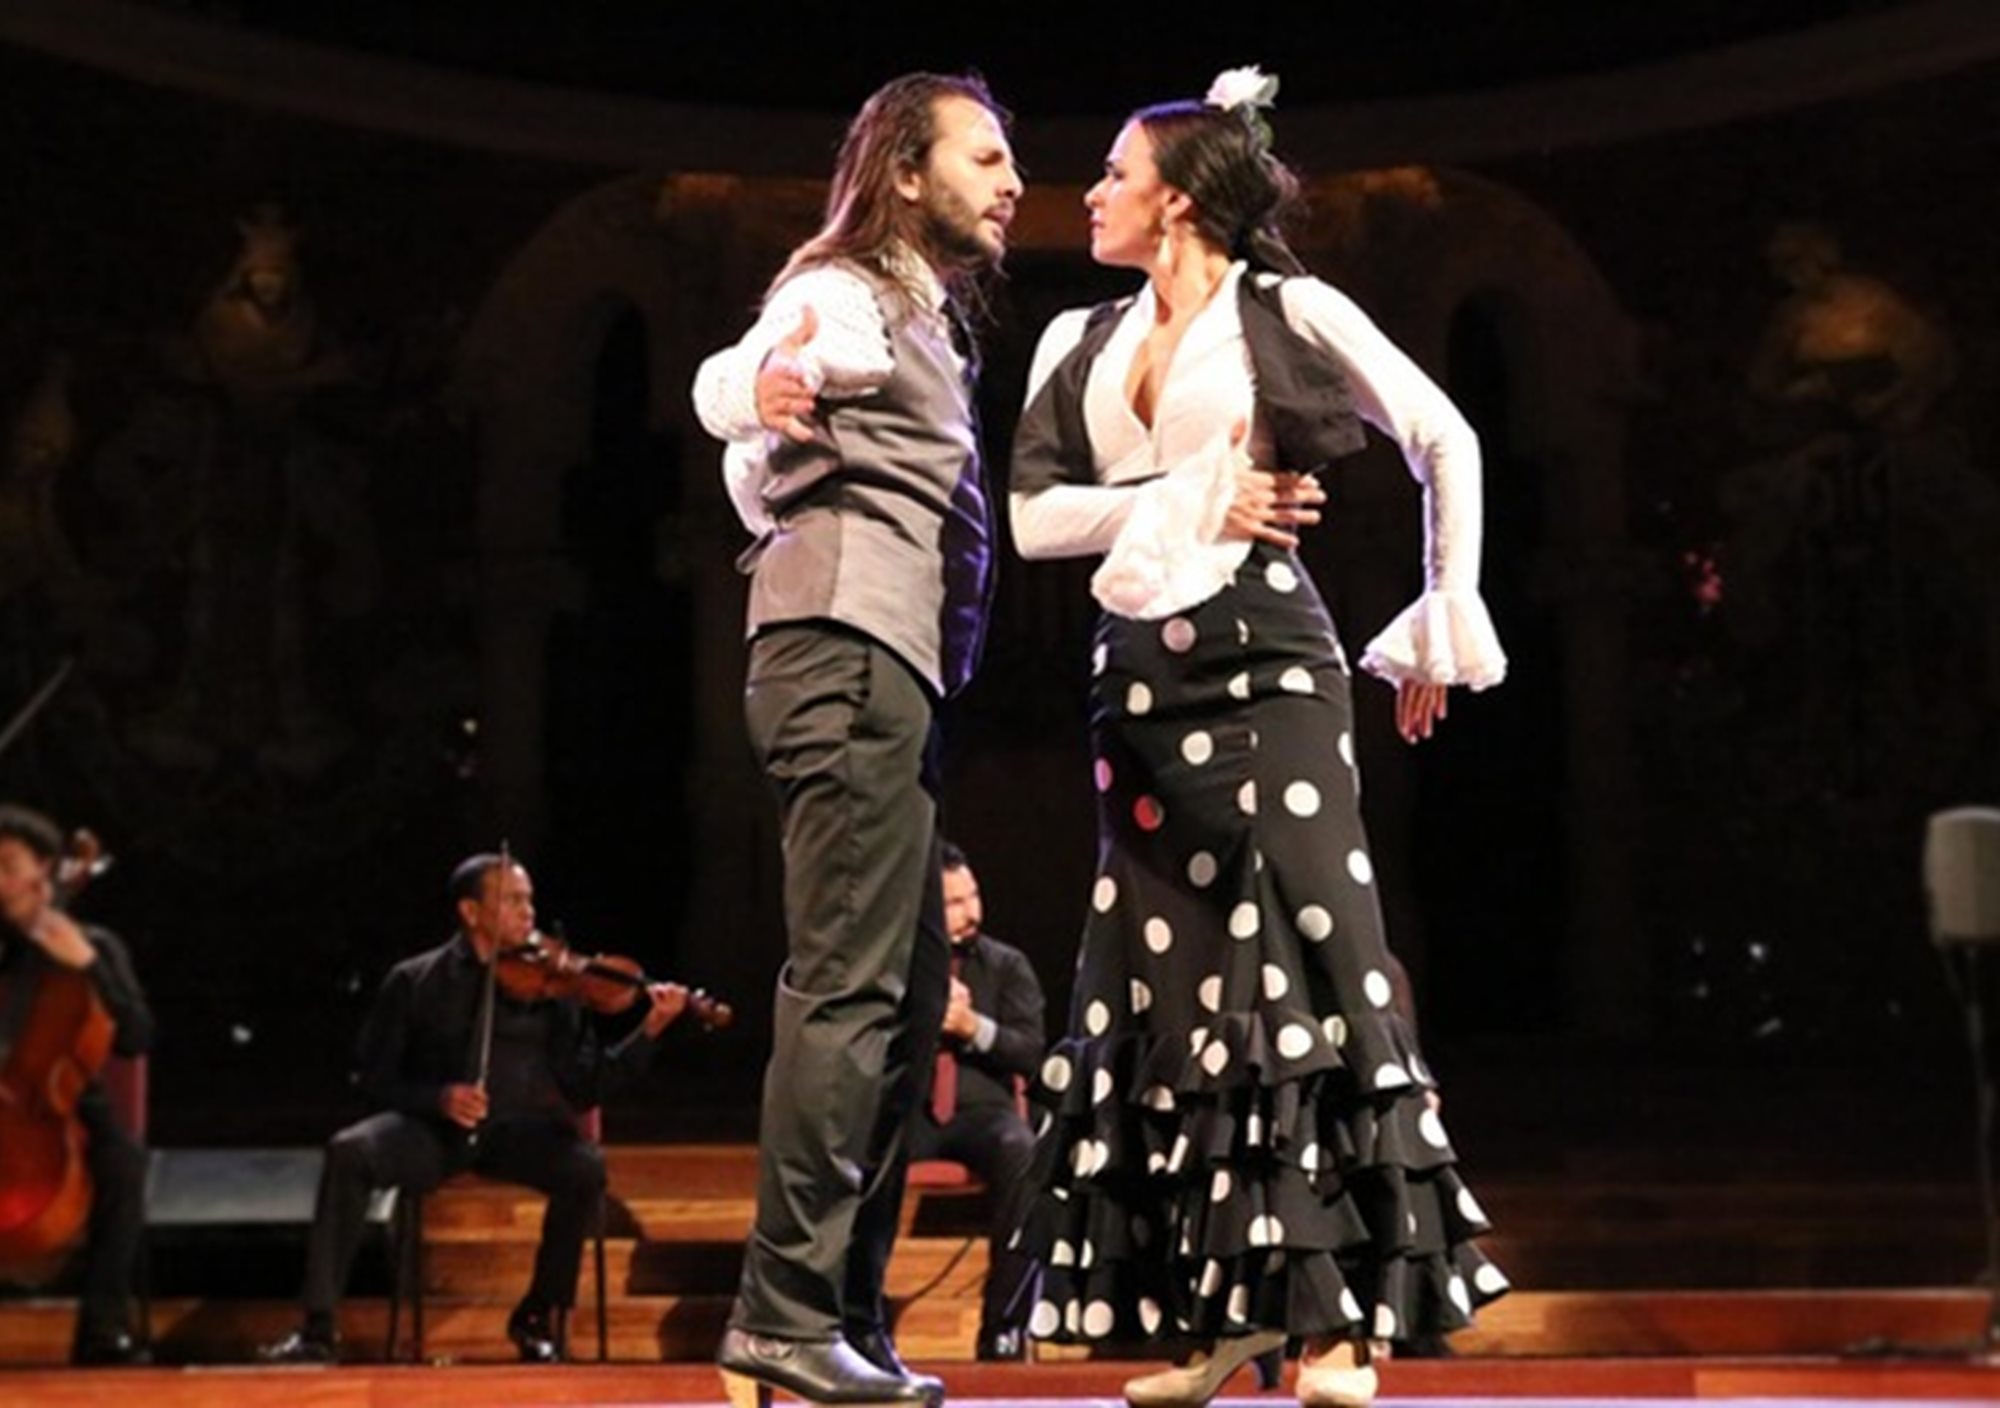 réservations visites guidées spectacle flamenco Teatre Poliorama barcelone billets visiter